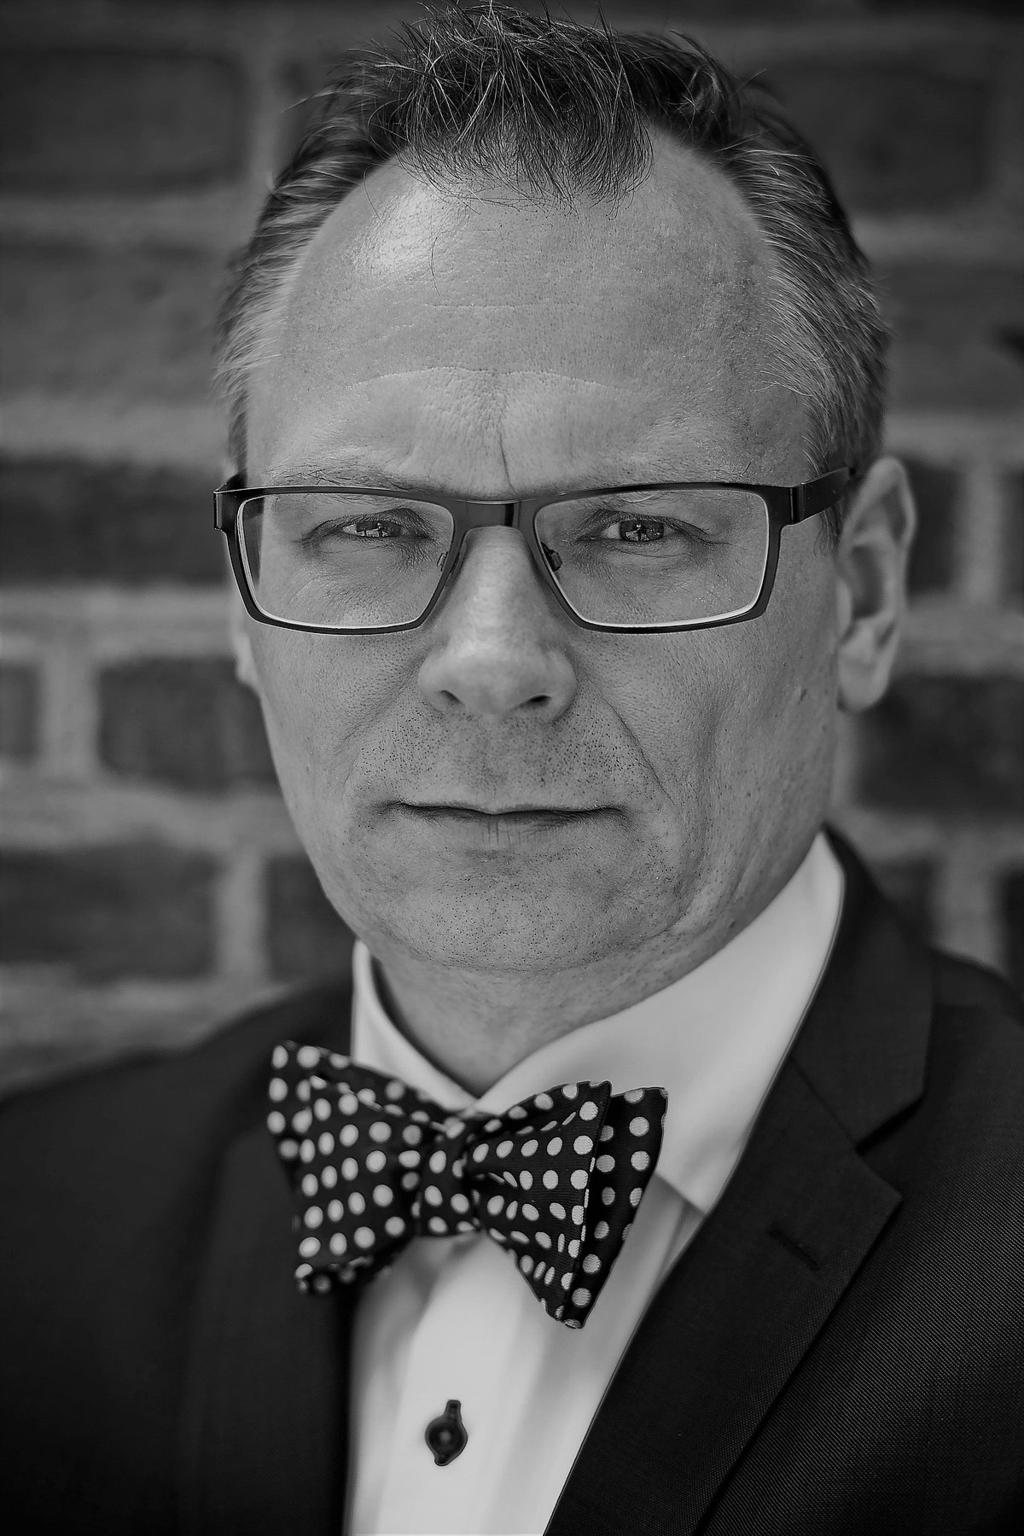 Forfatteren Lars Bangert Struwe Lars er generalsekretær i Atlantsammenslutningen. Lars har arbejdet med strategi og sikkerhedspolitik i bl.a. Forsvarsministeriet, Center for Militære Studier og Forsvarskommandoen.